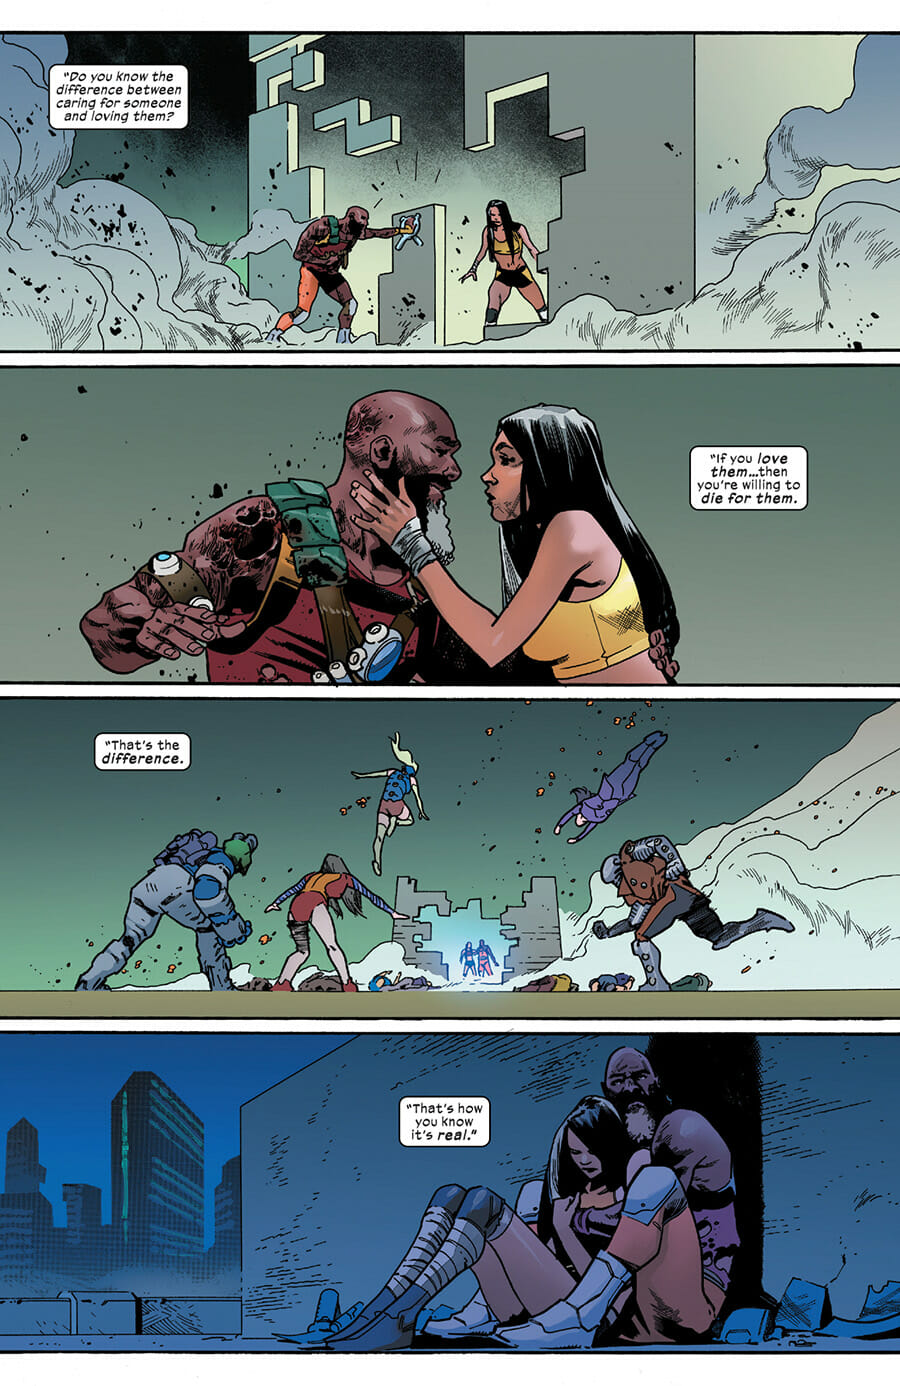 X-Men-19-Wolverine-Synch-Relationship.jpeg